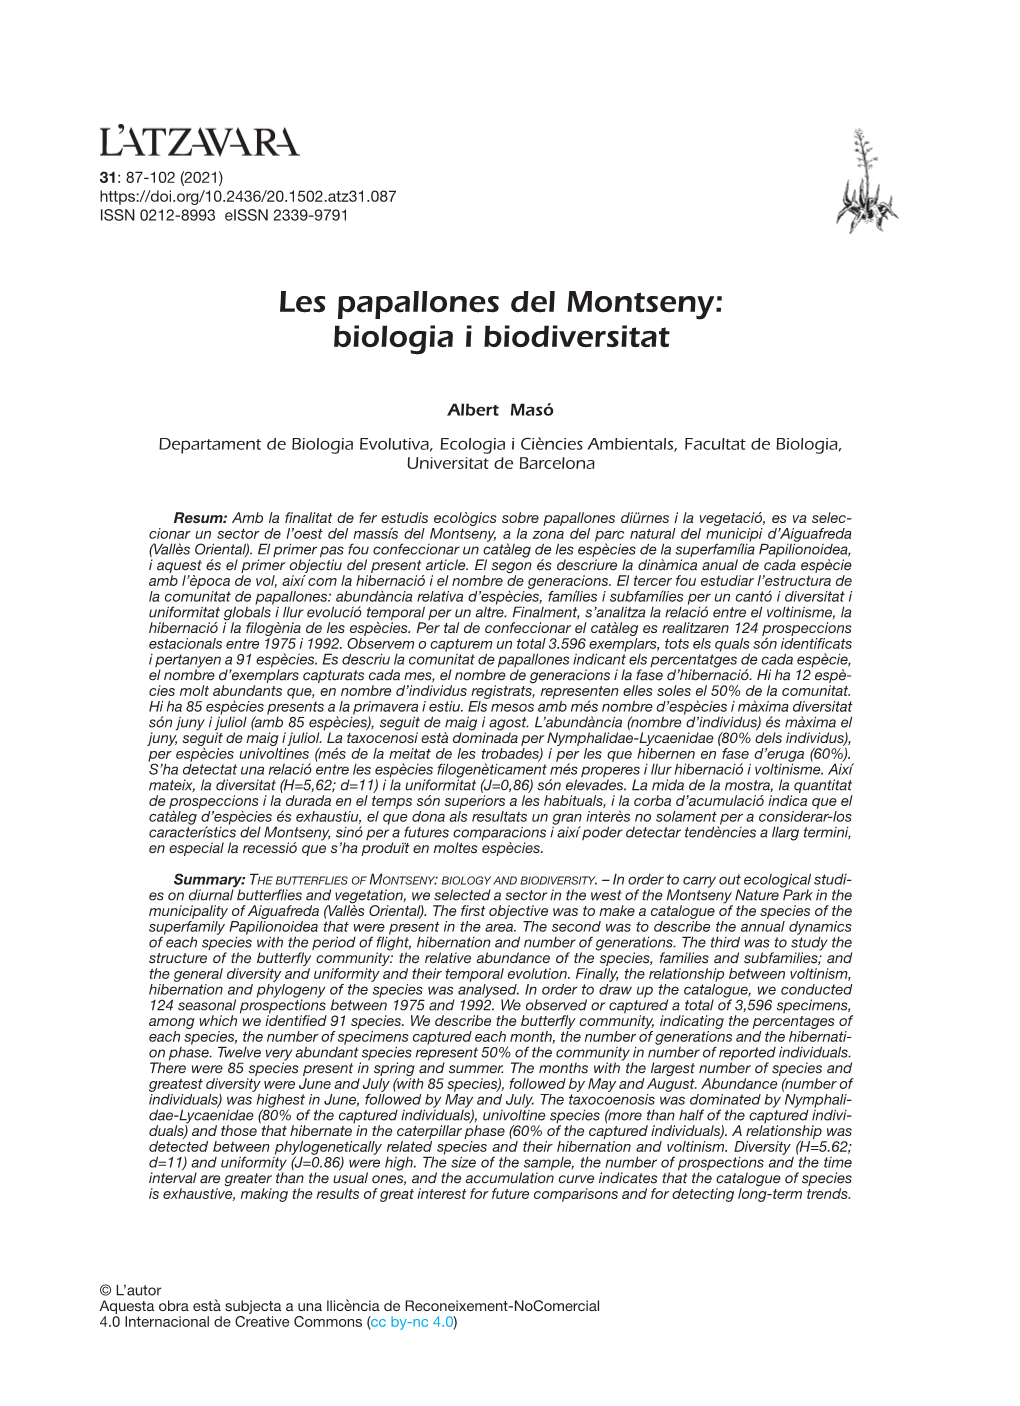 Les Papallones Del Montseny: Biologia I Biodiversitat